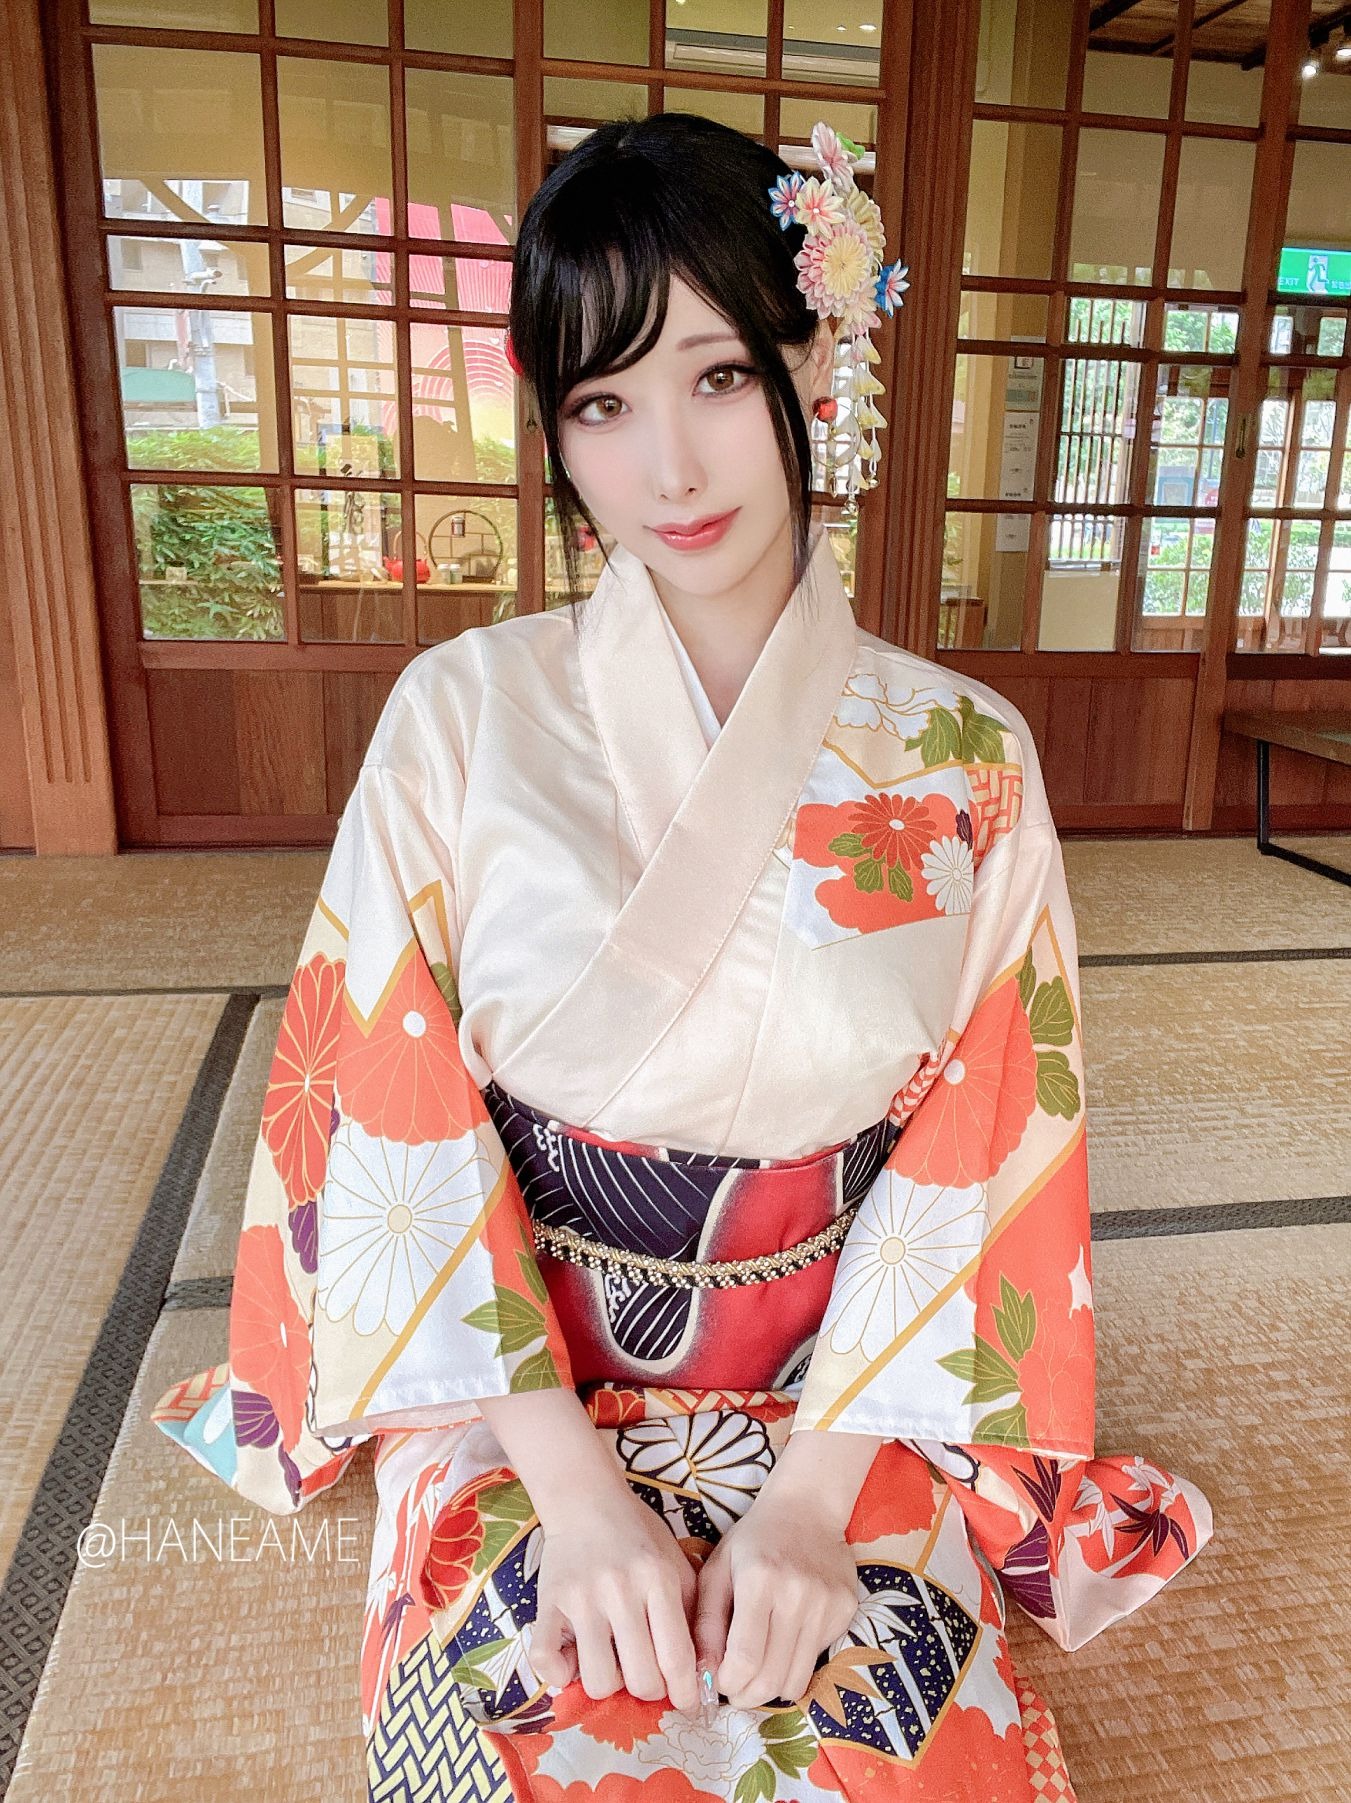 HaneAme 雨波 — Flower Print Kimono Girl(38)